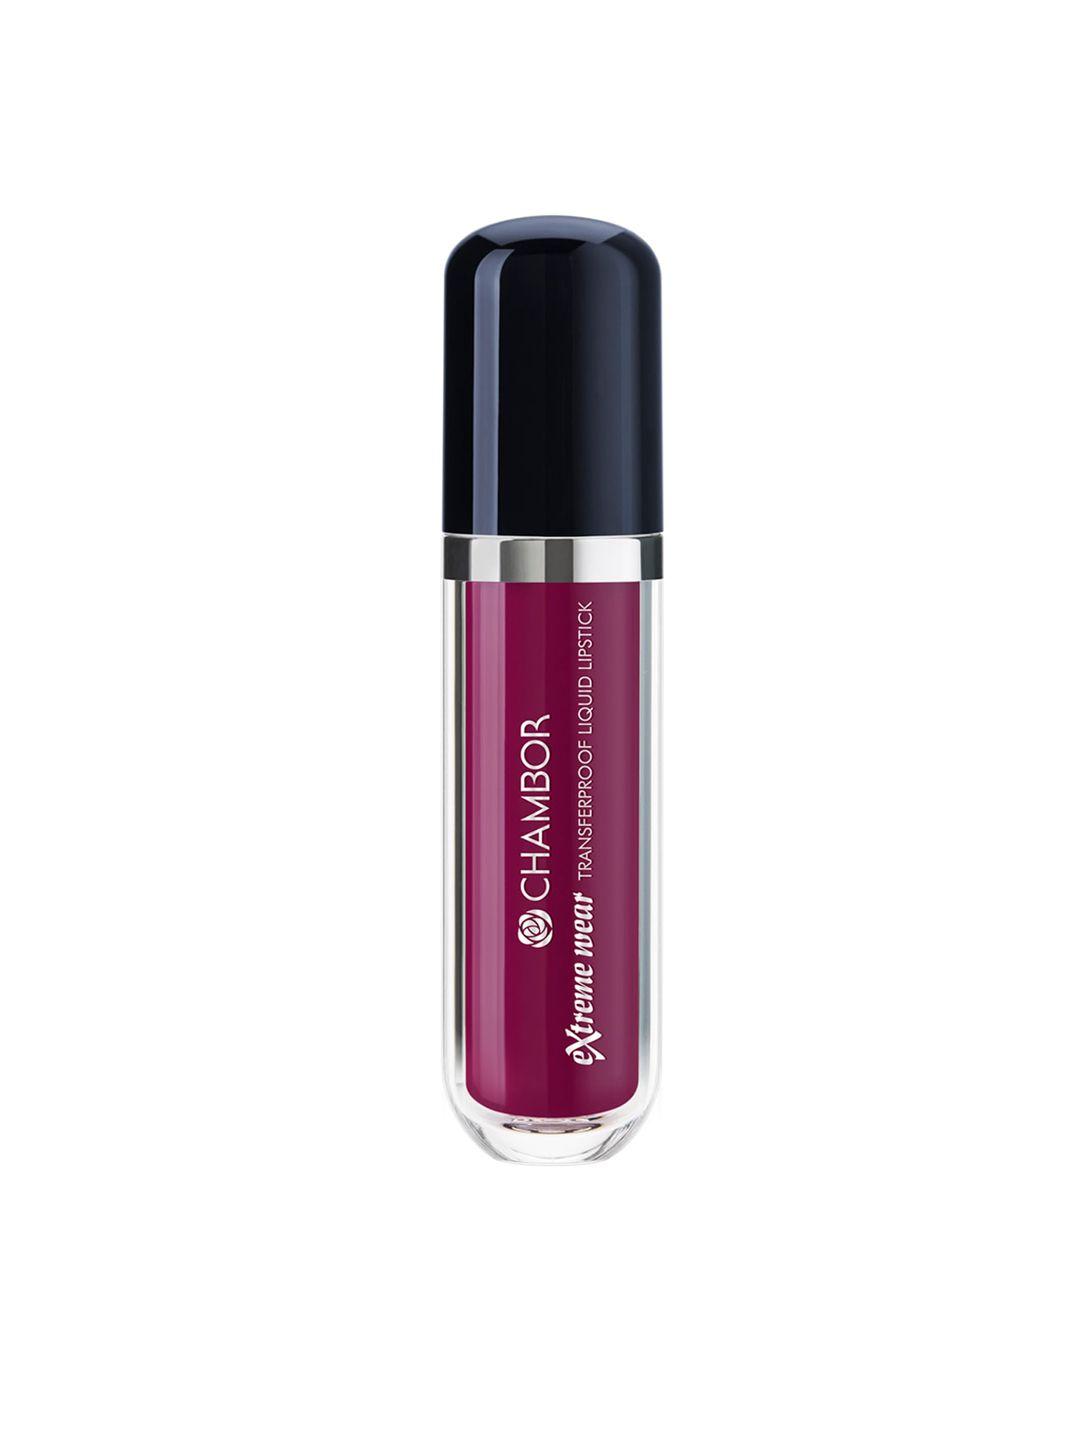 chambor extreme wear transferproof liquid lipstick primrose pink #410 6 ml